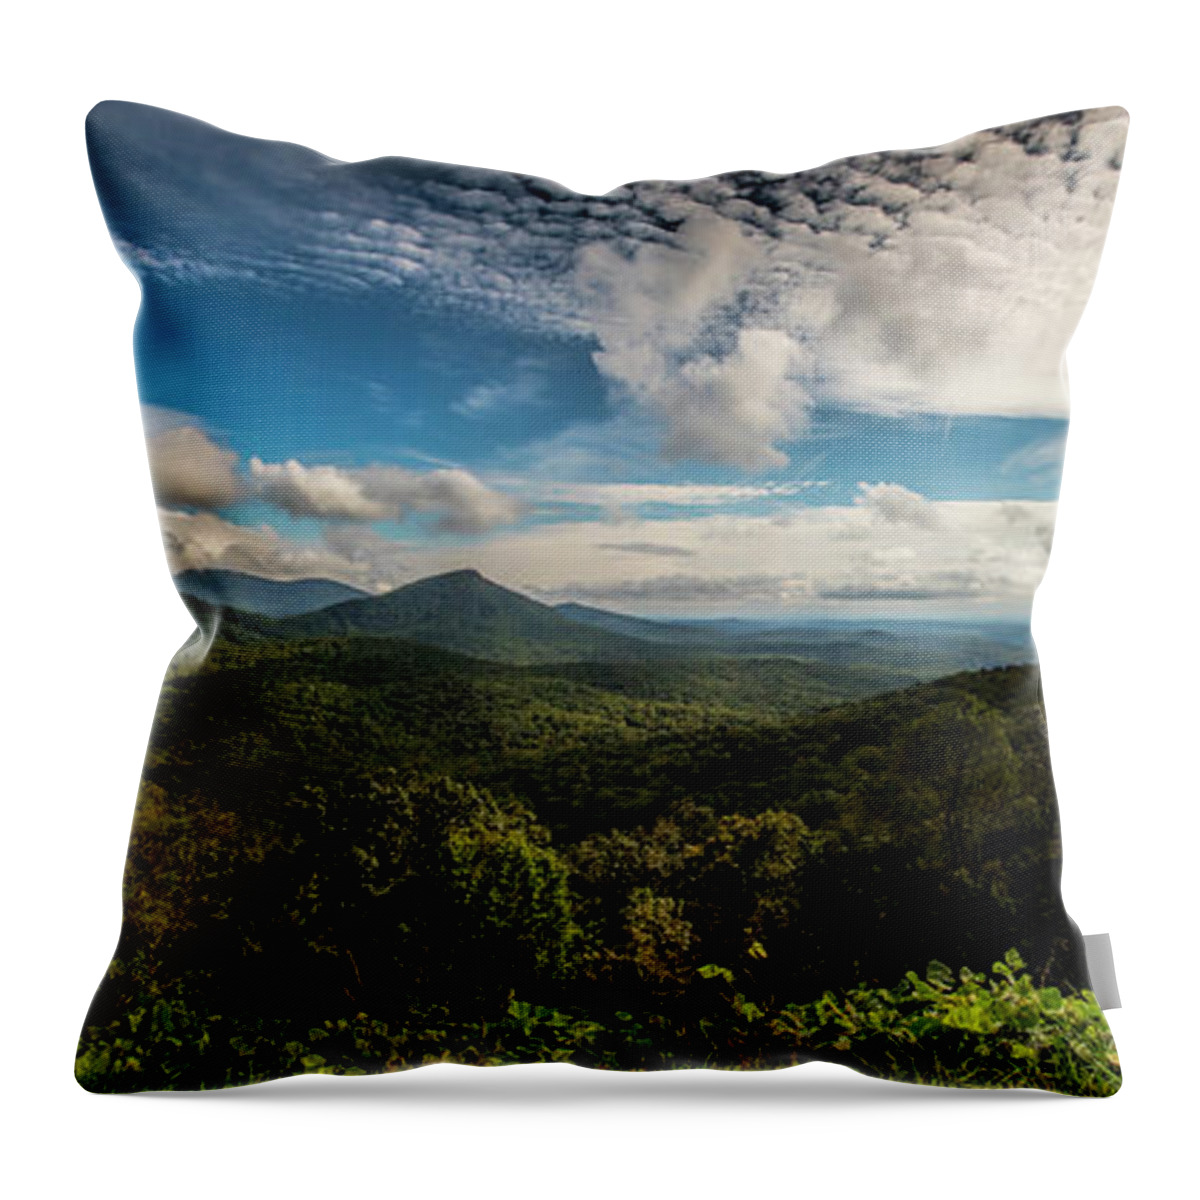 Appalachian Foothills Throw Pillow featuring the photograph Appalachian Foothills by Barbara Bowen